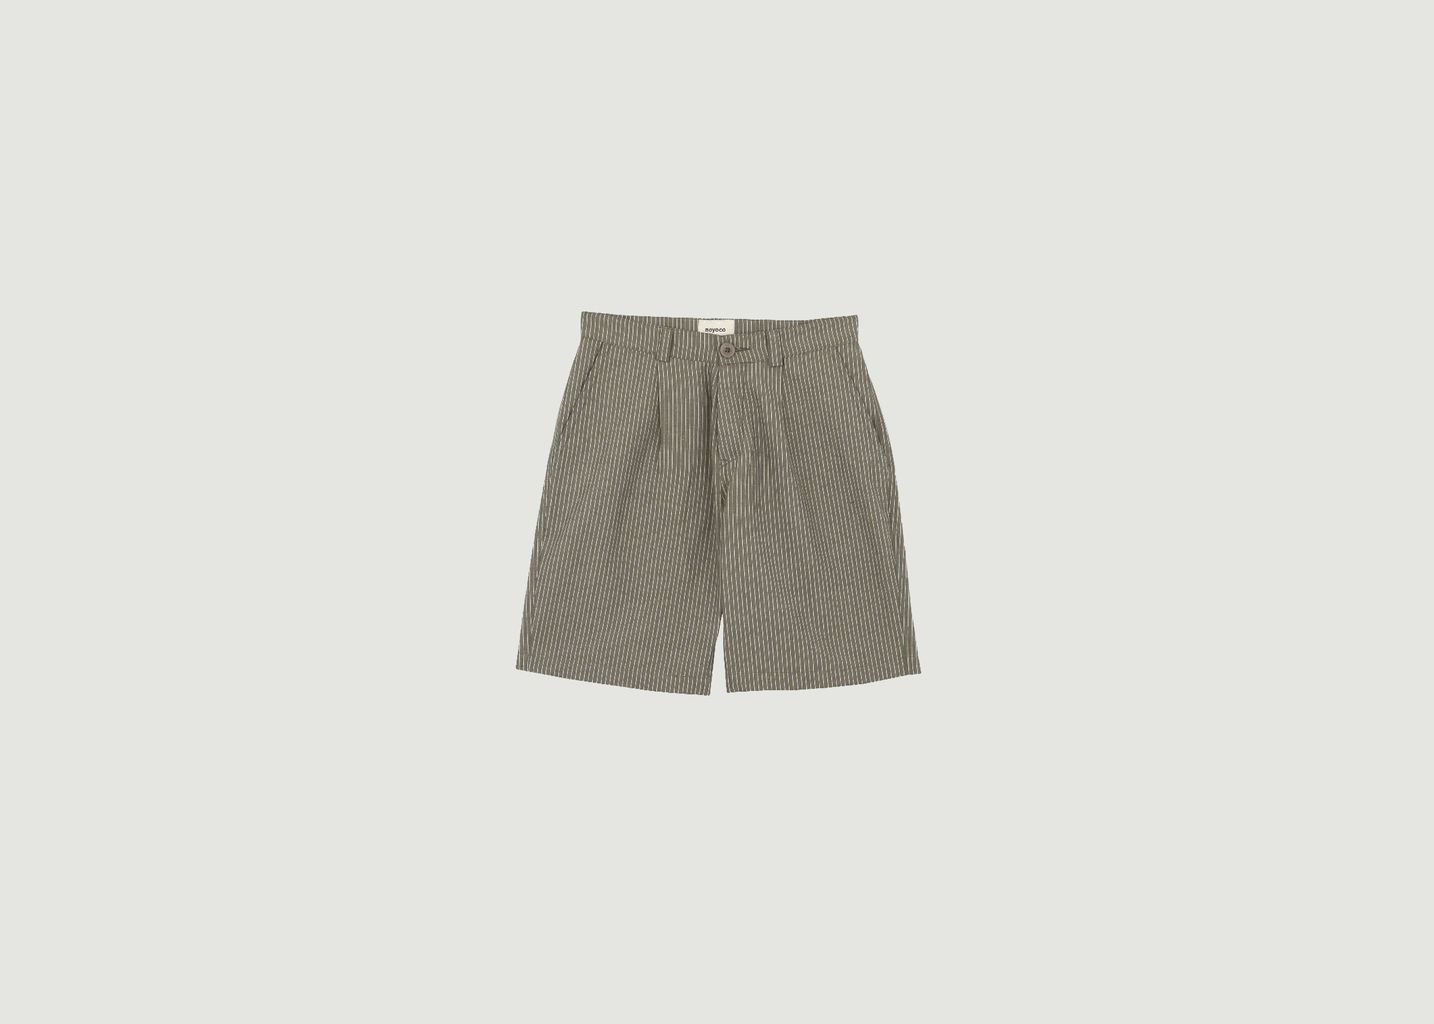 Malta Shorts - noyoco